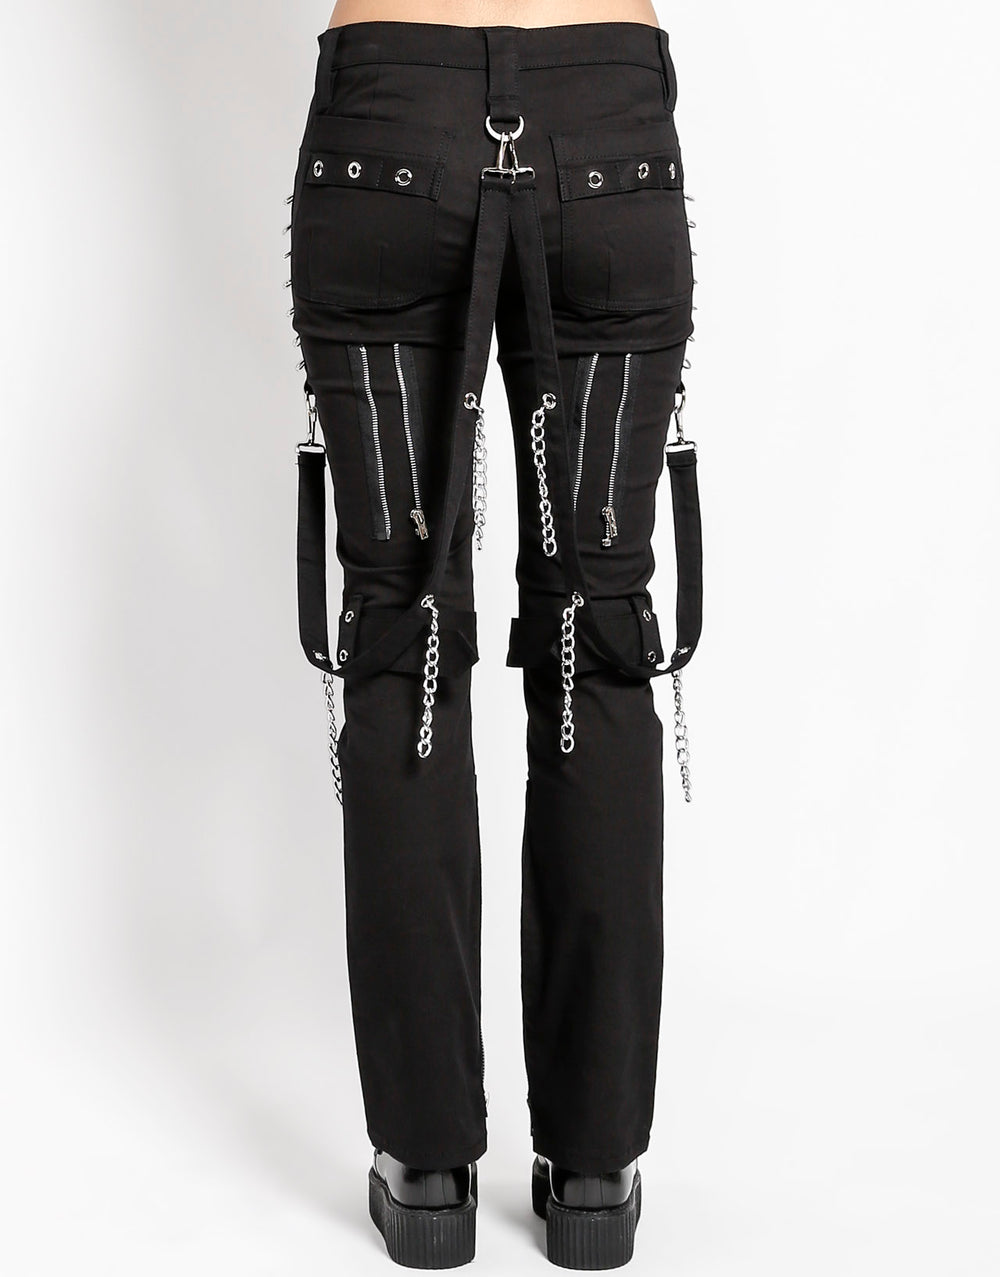 Tripp NYC - Men's Multi-strap studded pant Slim fit